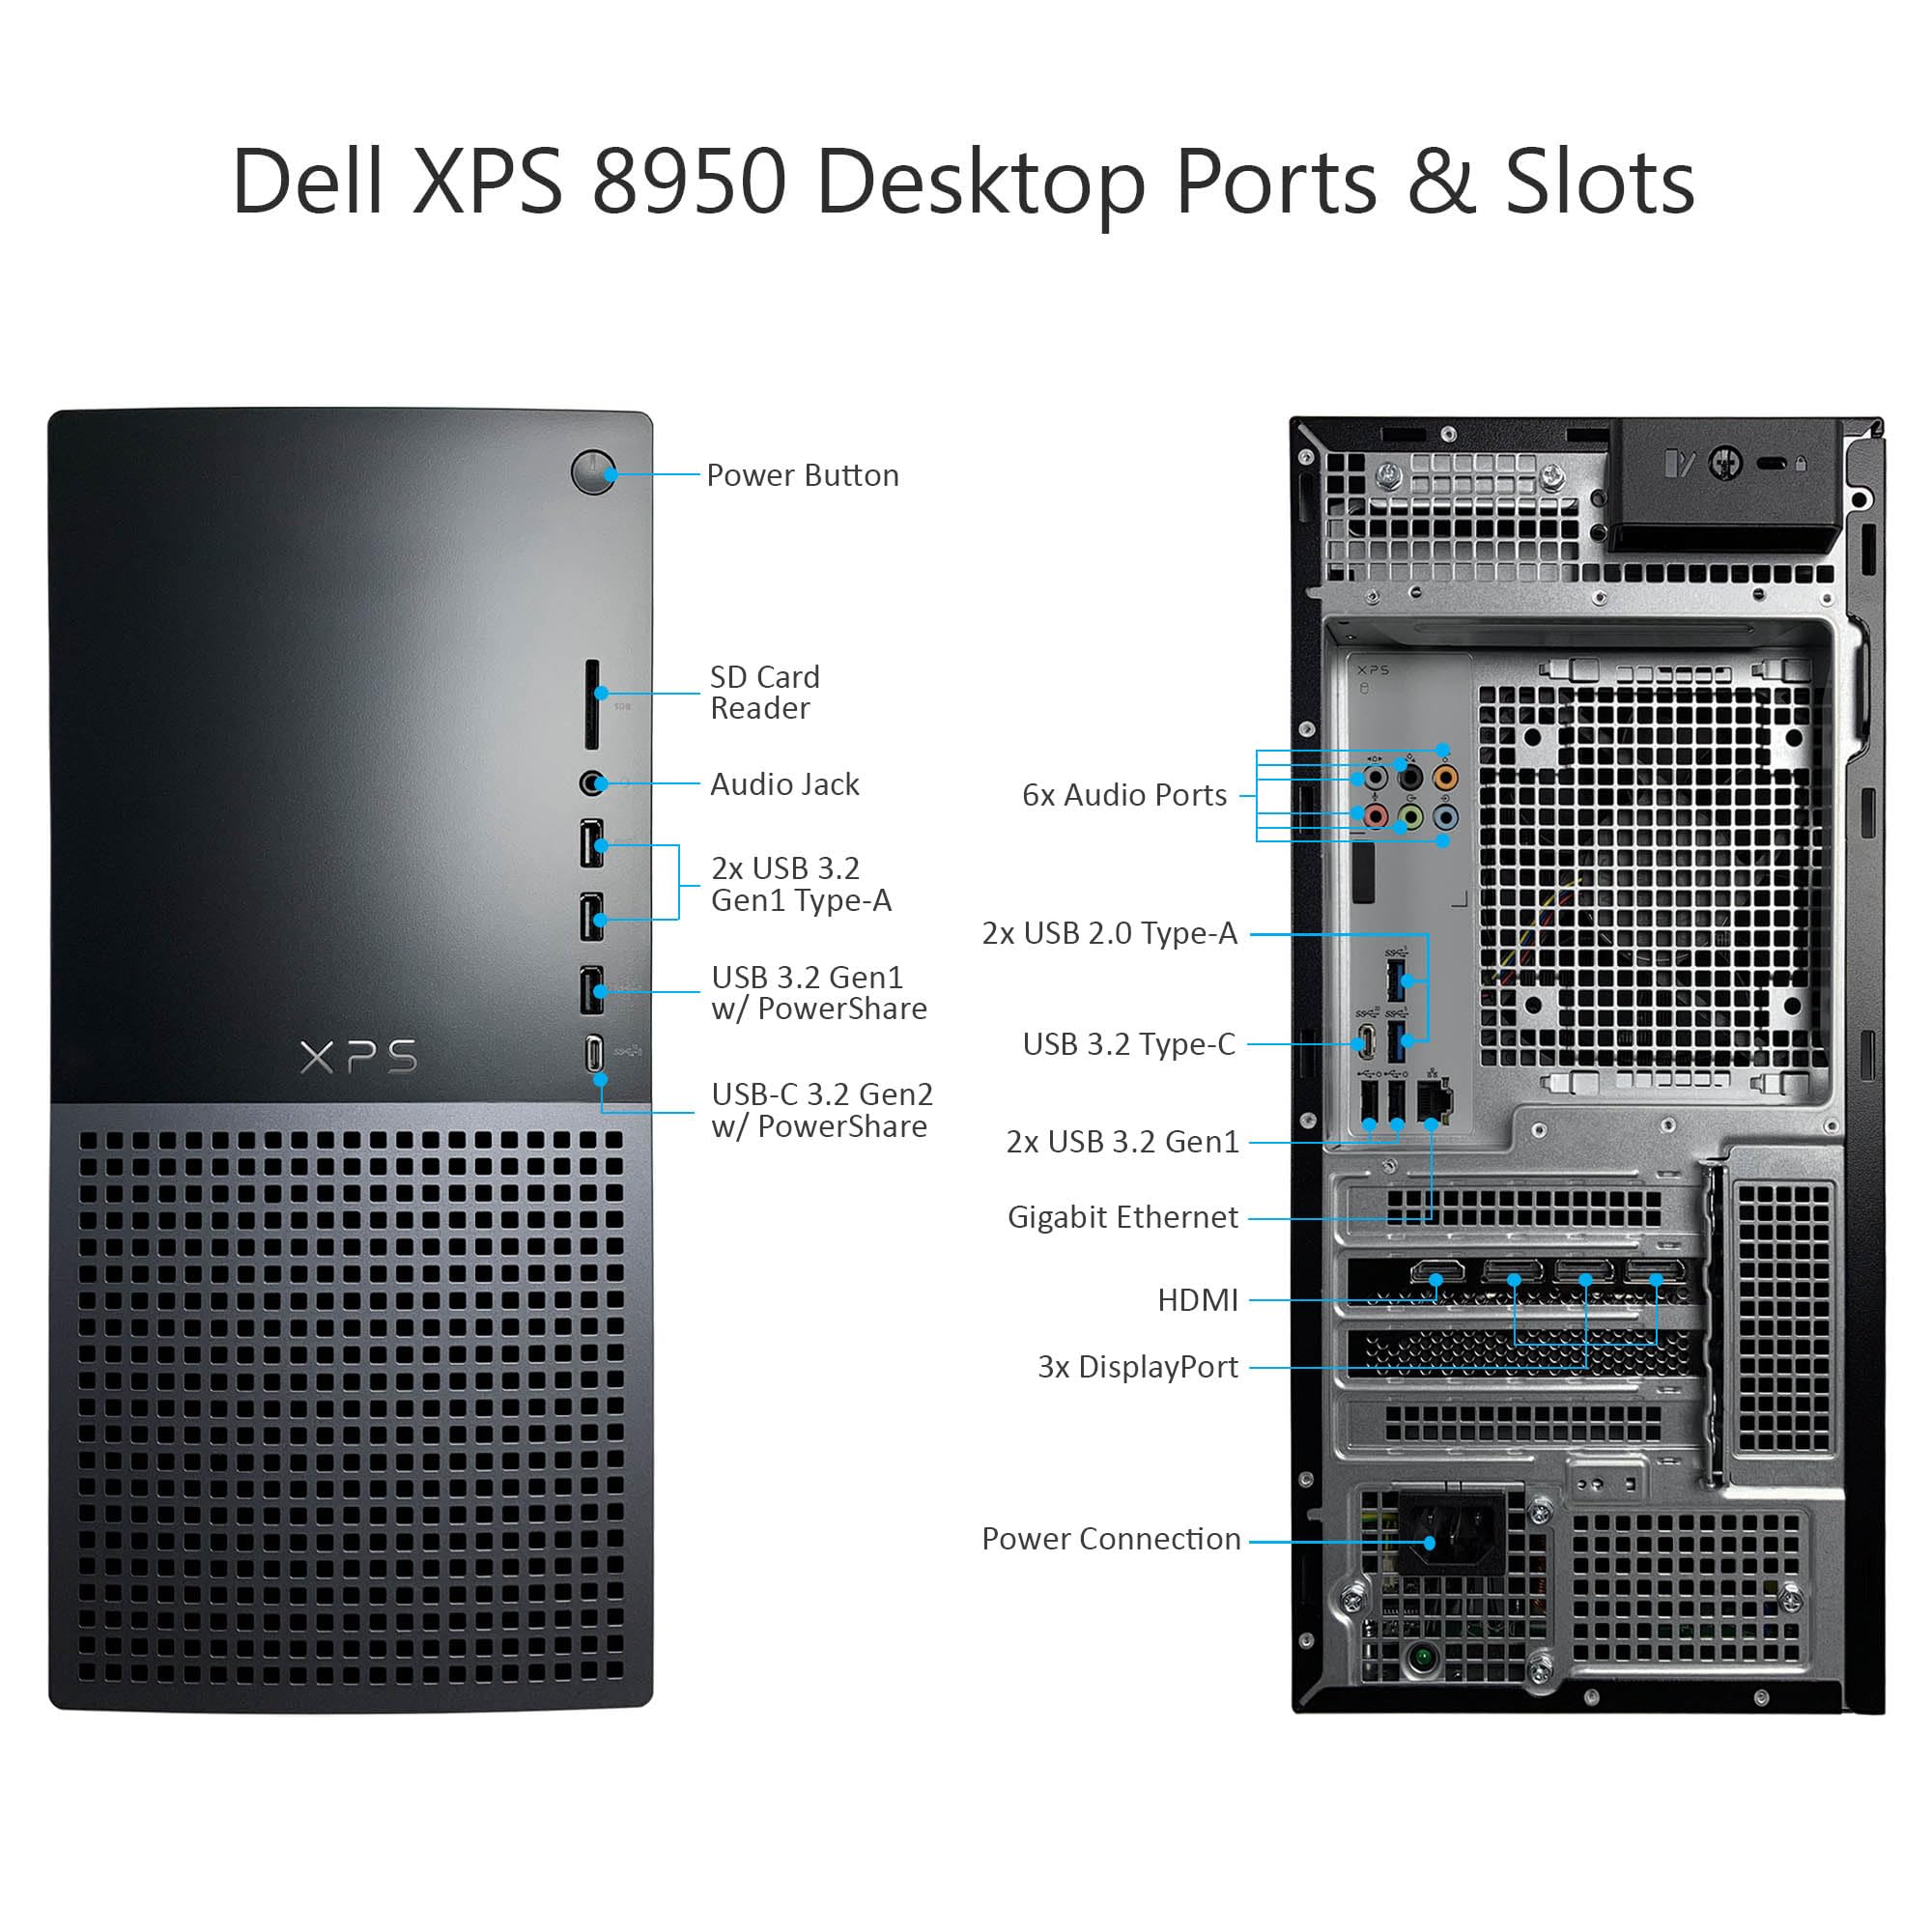 Dell XPS 8950 Gaming Desktop Computer - 12th Gen Intel Core i9-12900K up to 5.2 GHz CPU, 64GB DDR5 RAM, 1TB NVMe SSD + 1TB HDD, GeForce RTX 3090 24GB GDDR6, Killer Wi-Fi 6, Windows 11 Pro